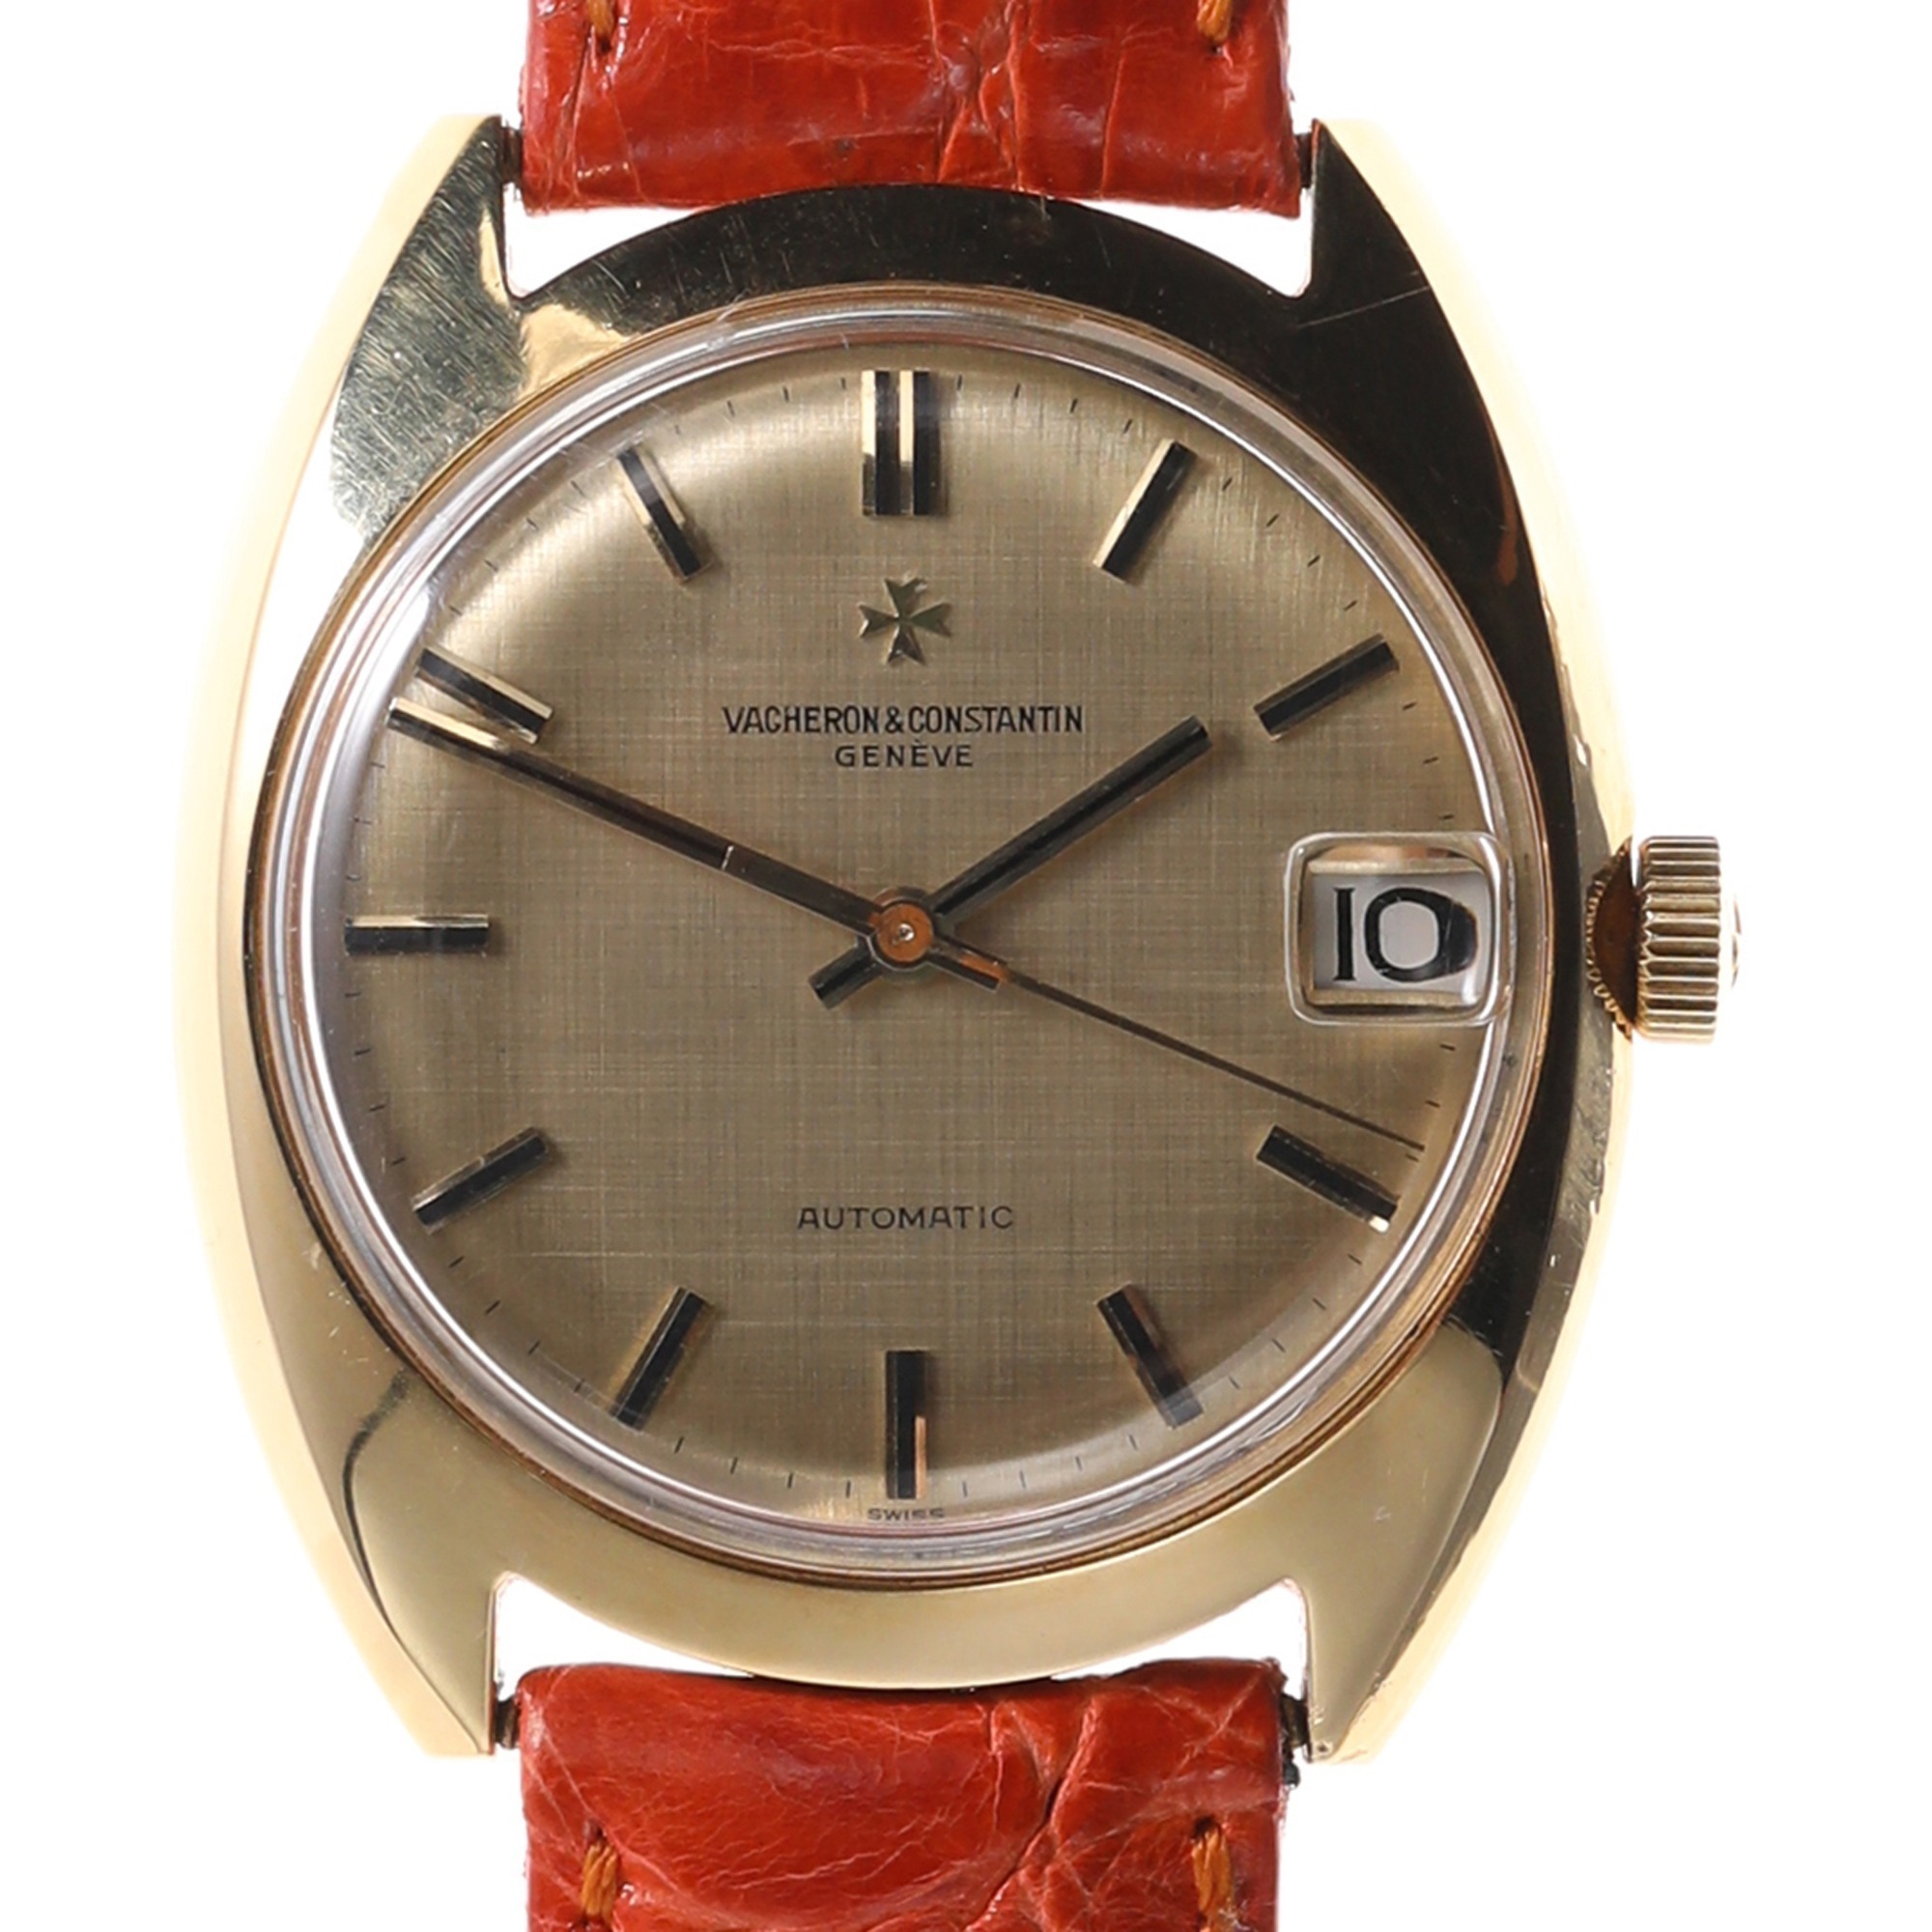 Vacheron & Constantin 18K Yellow Gold Ref. 7397 Men's Automatic Wristwatch with Date